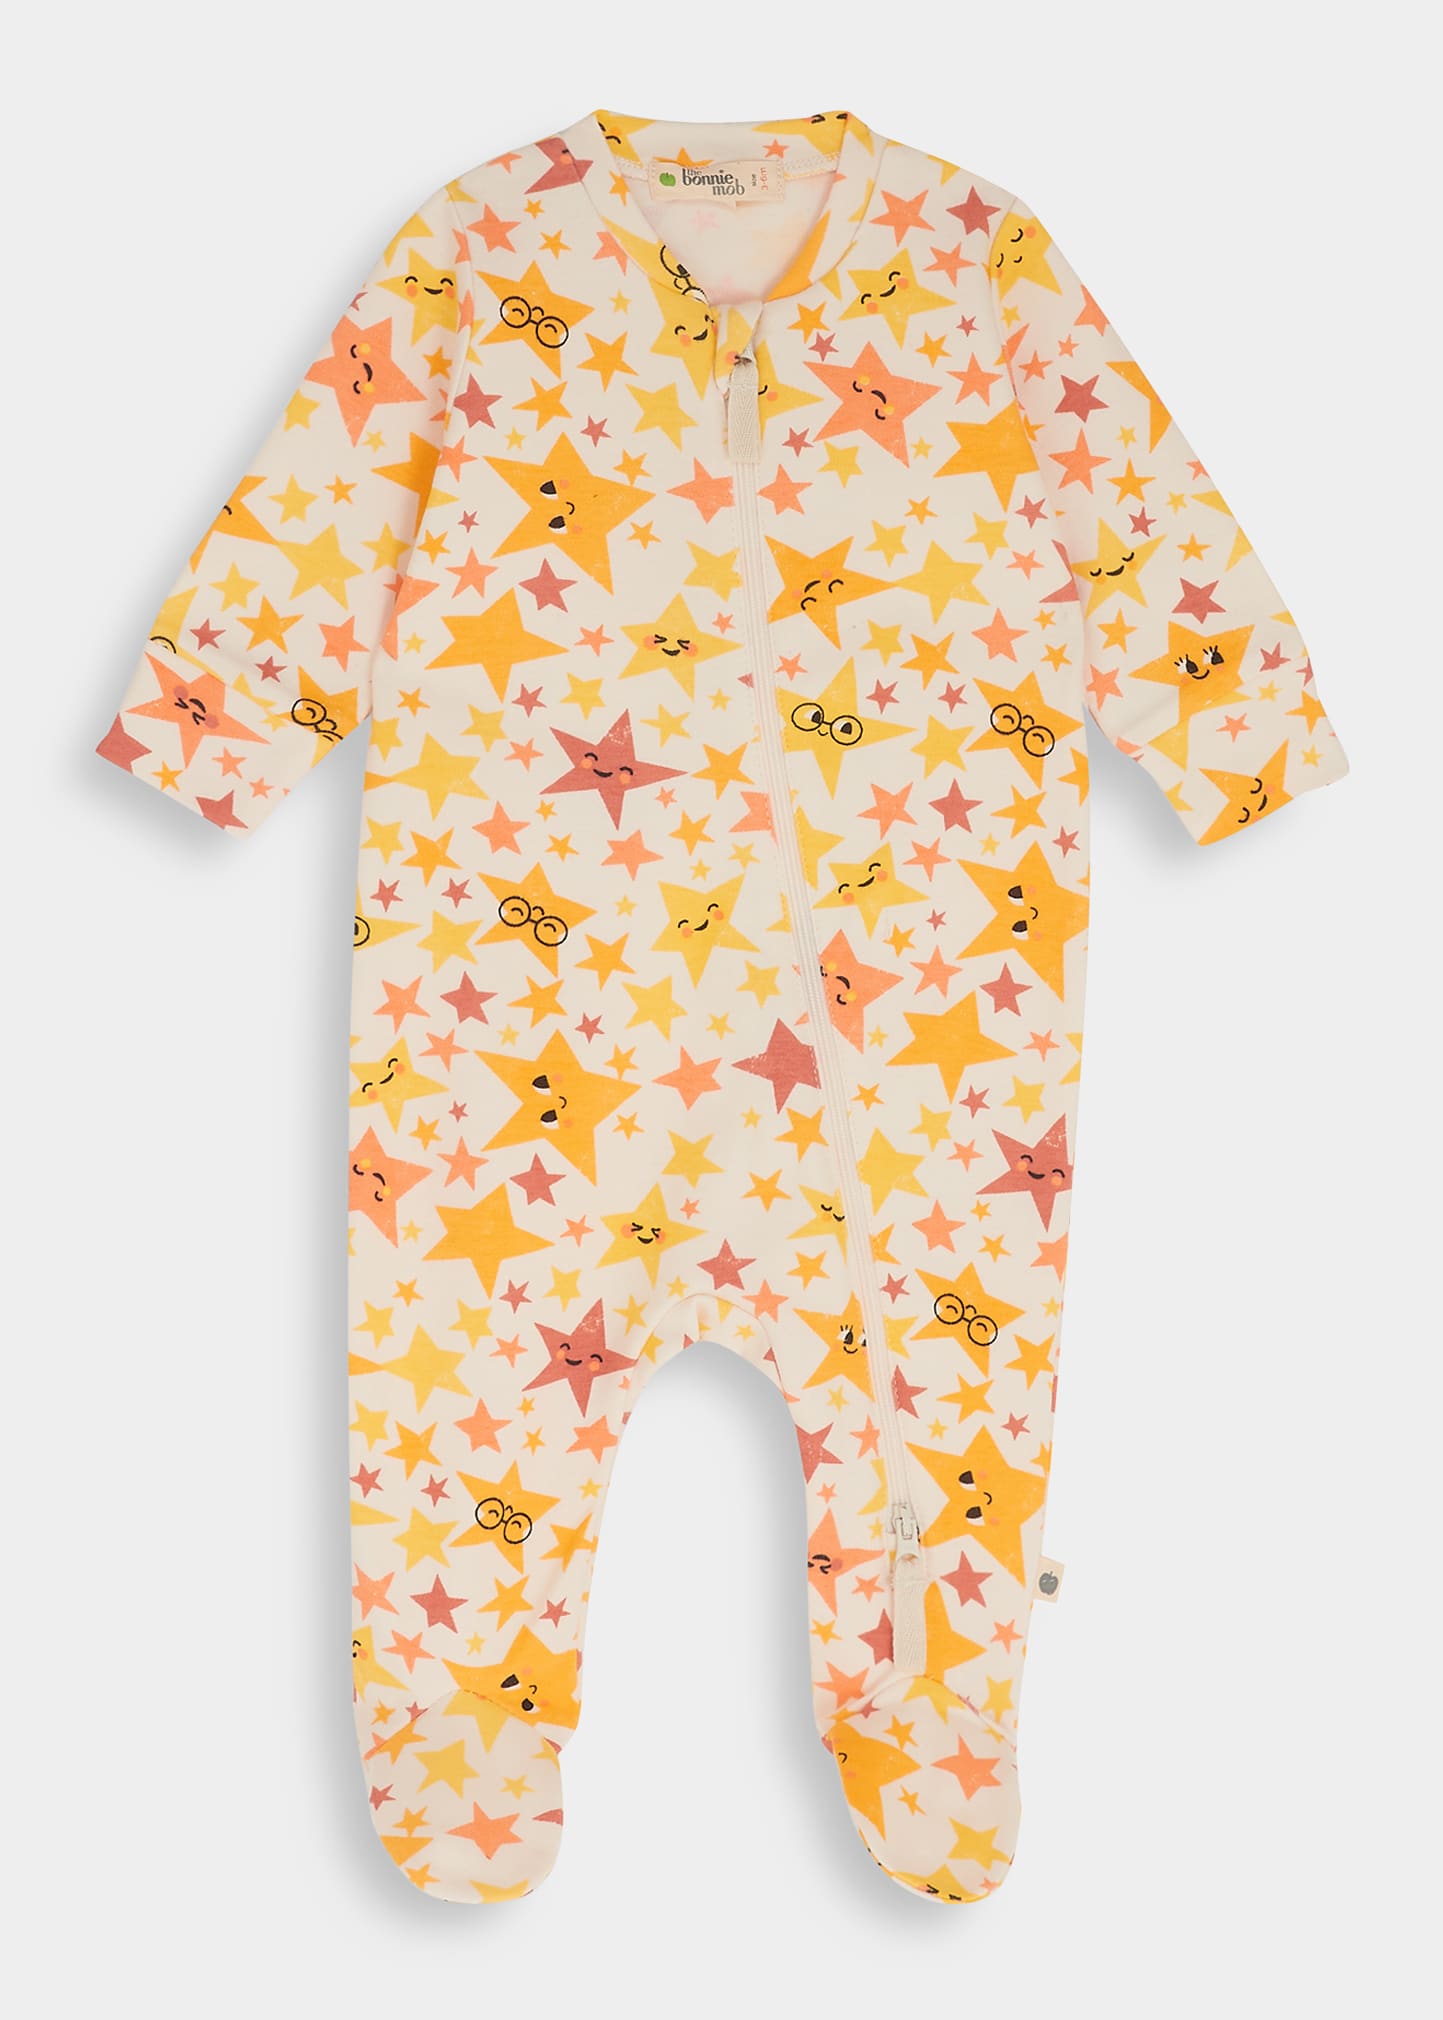 bonniemob Kid's Stars-Print Footie Pajamas, Size Newborn-18M